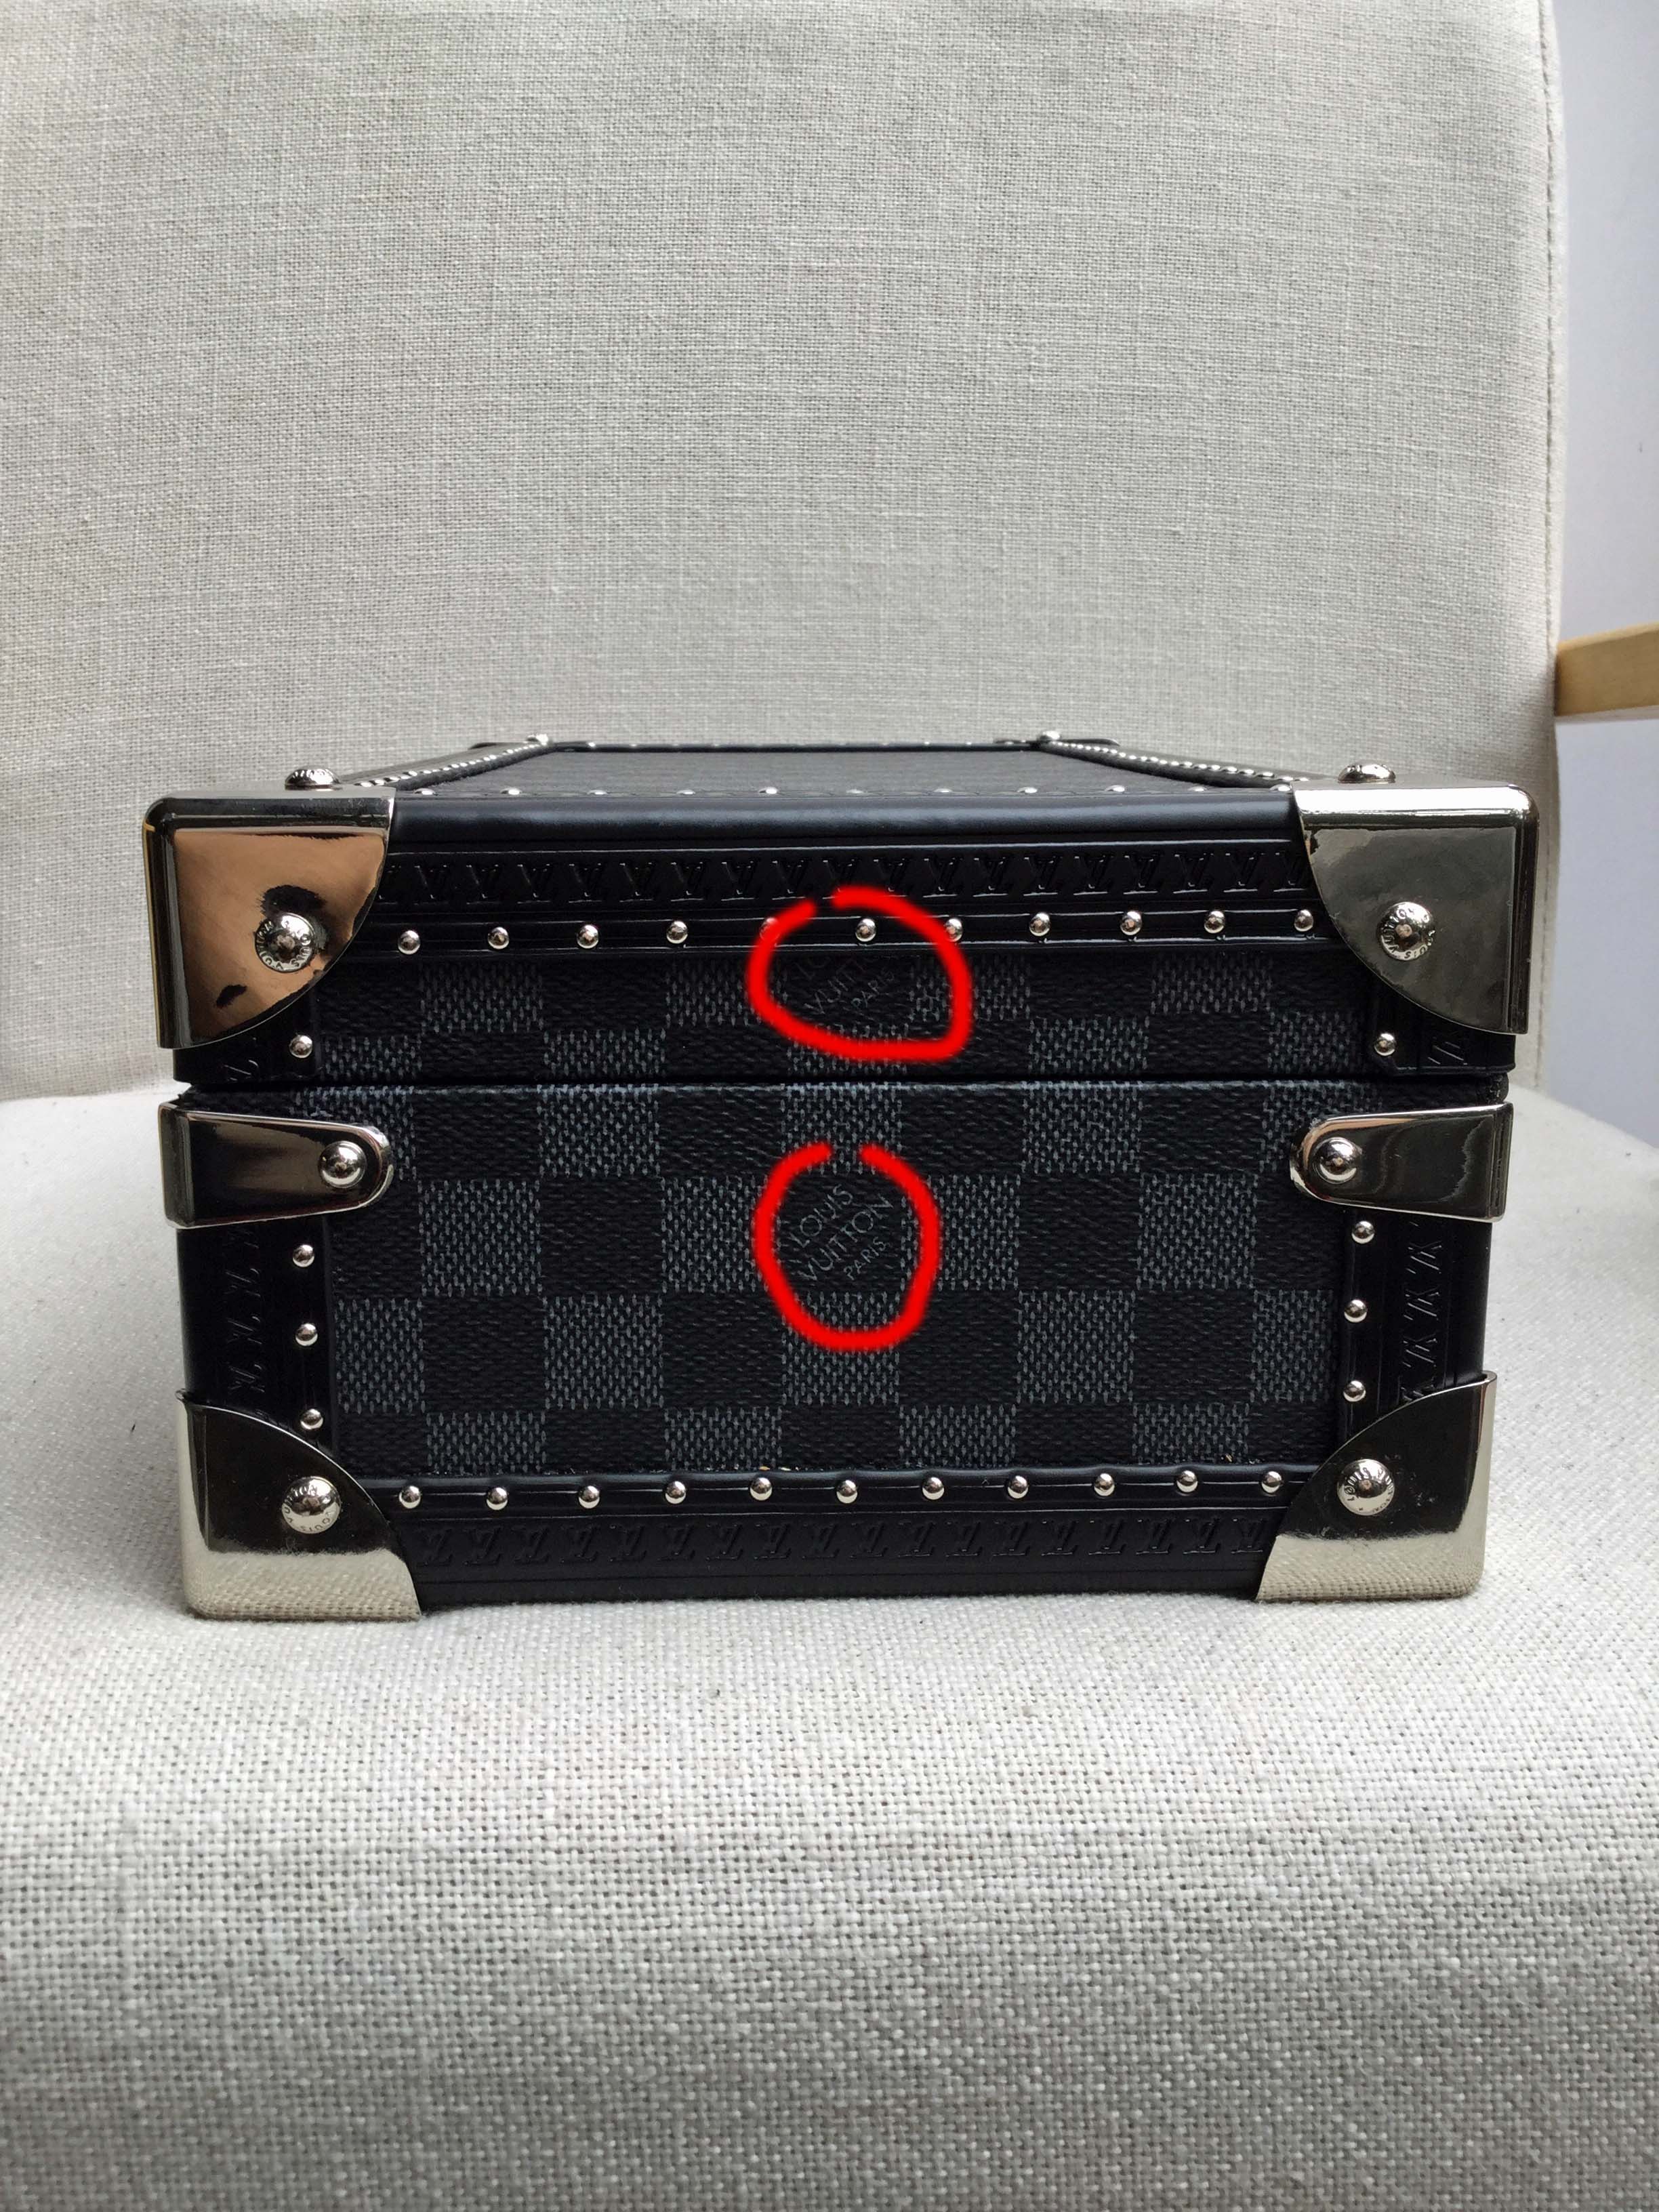 My daily bag - LV Trunk Clutch Box in Monogram Eclipse : r/Louisvuitton